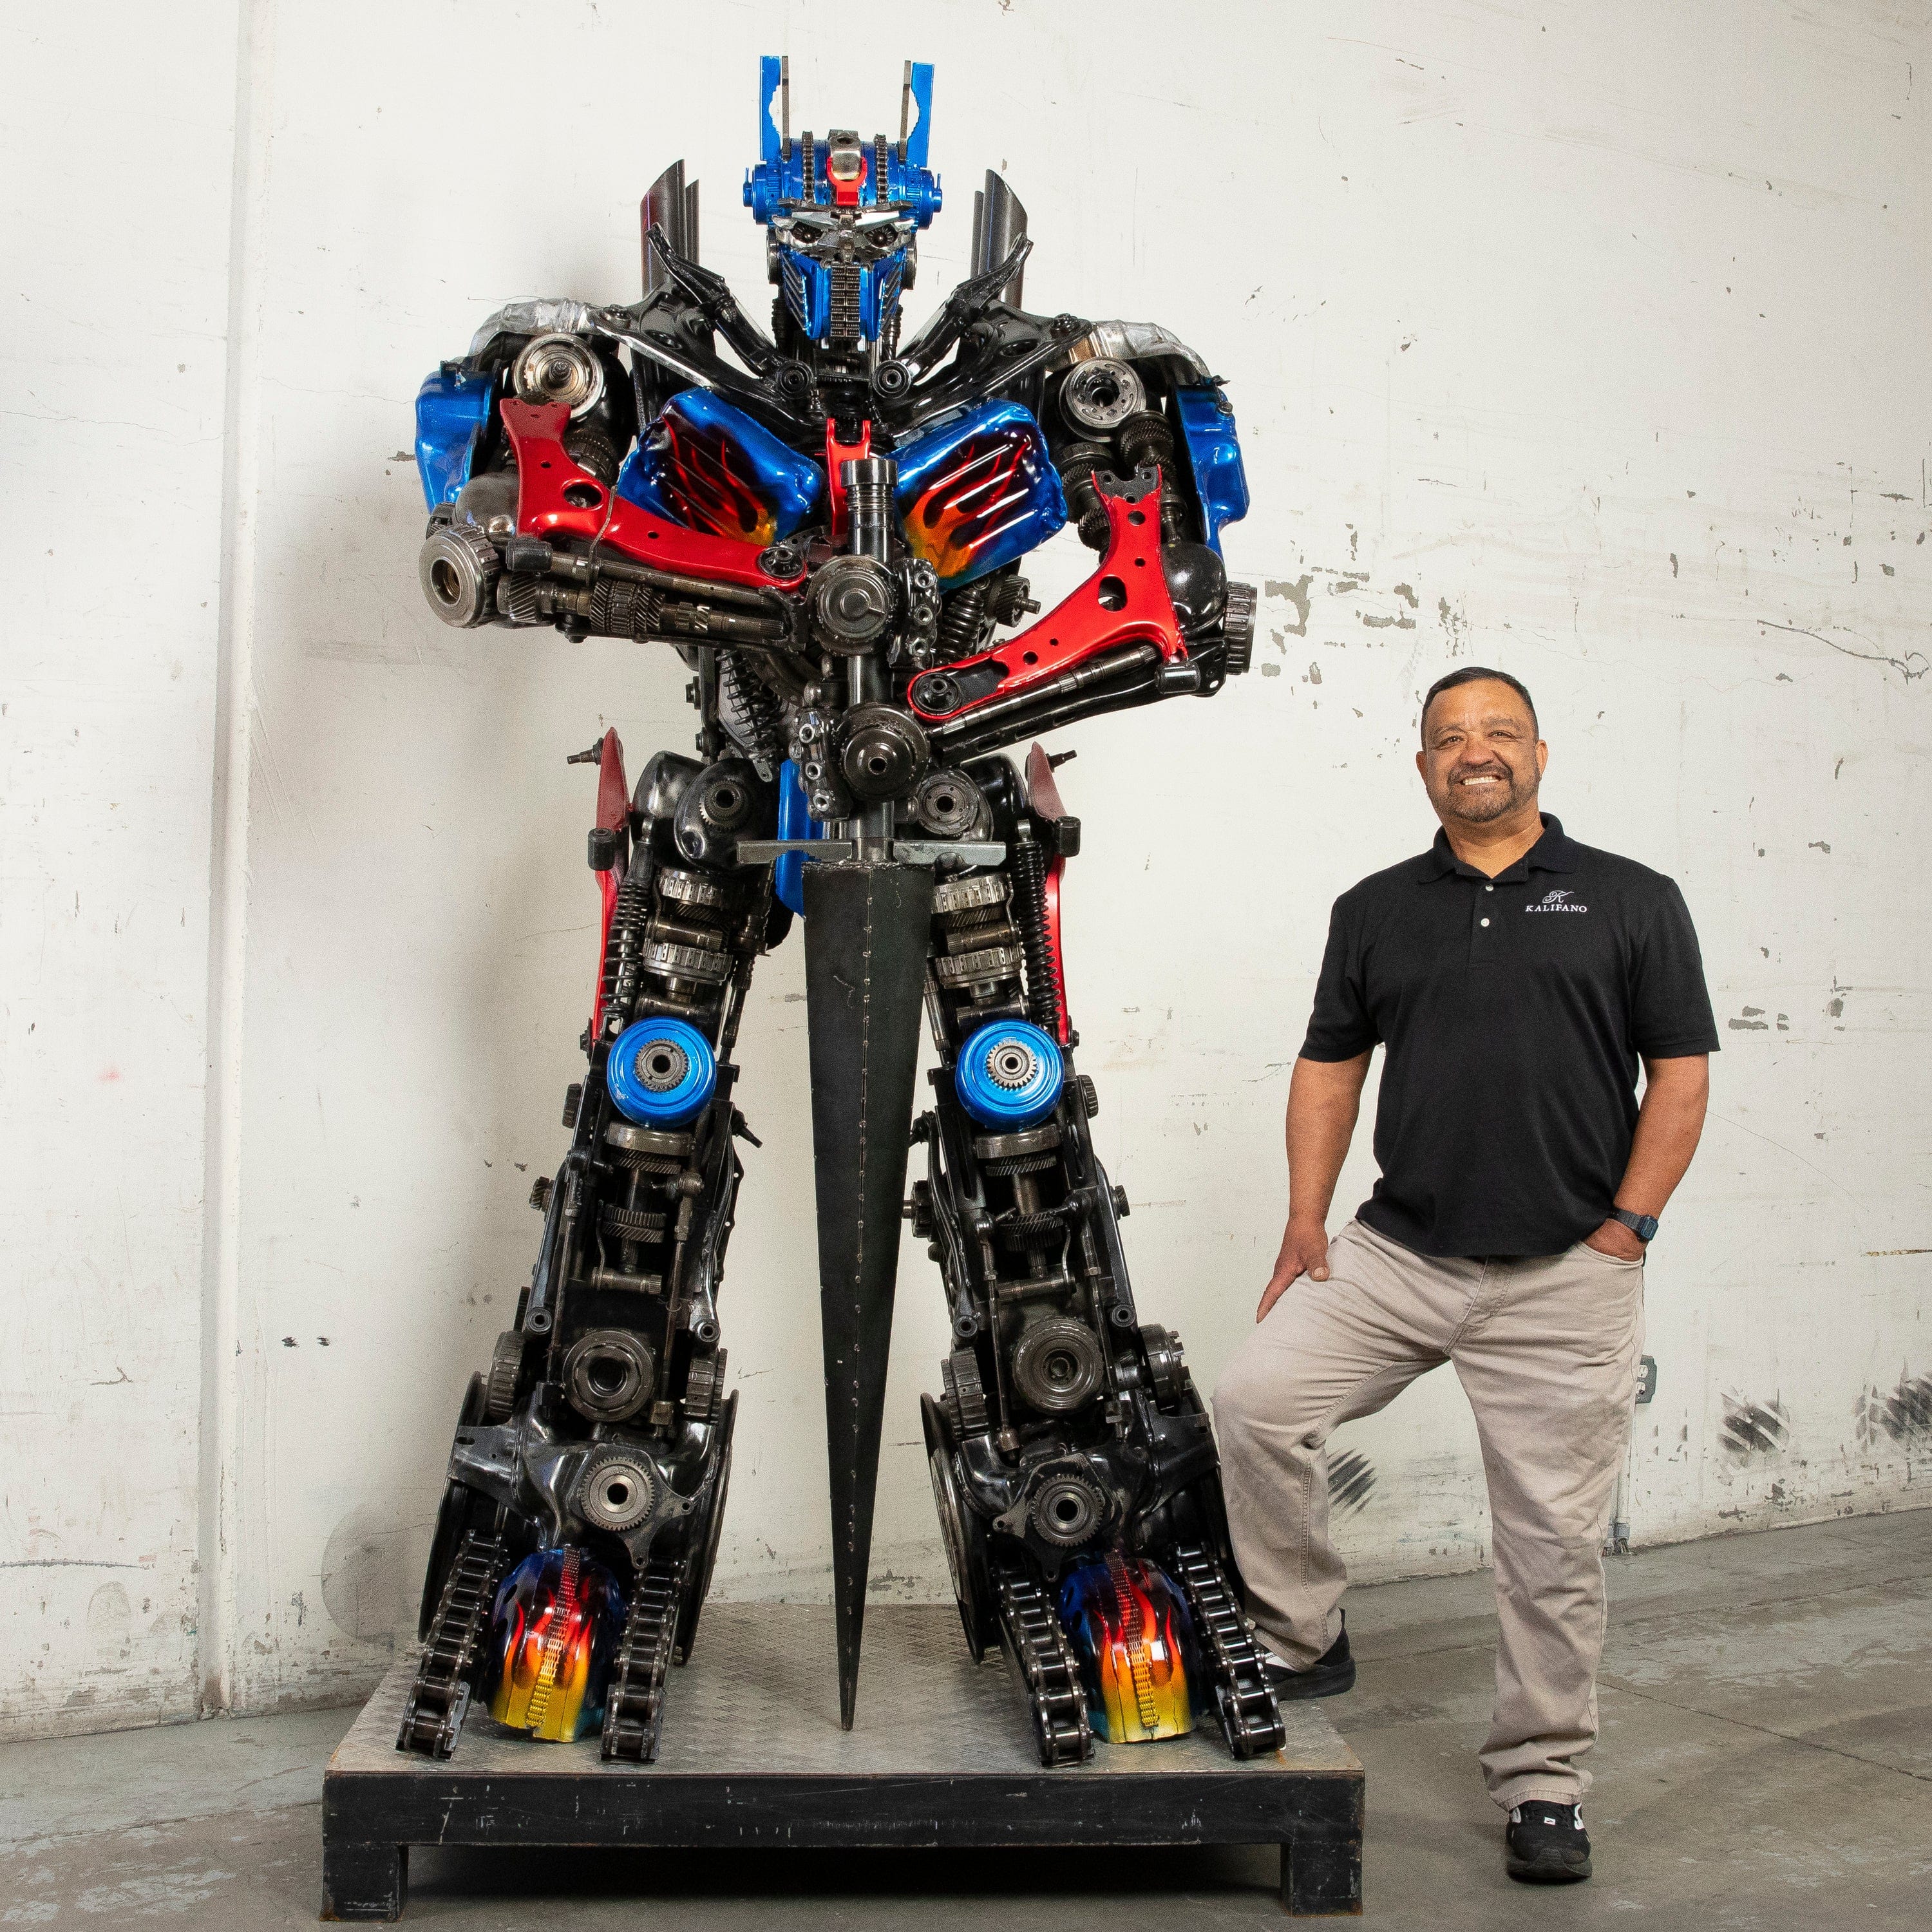 Kalifano Recycled Metal Art 91" Optimus Prime Inspired Recycled Metal Art Sculpture RMS-OP230-S24